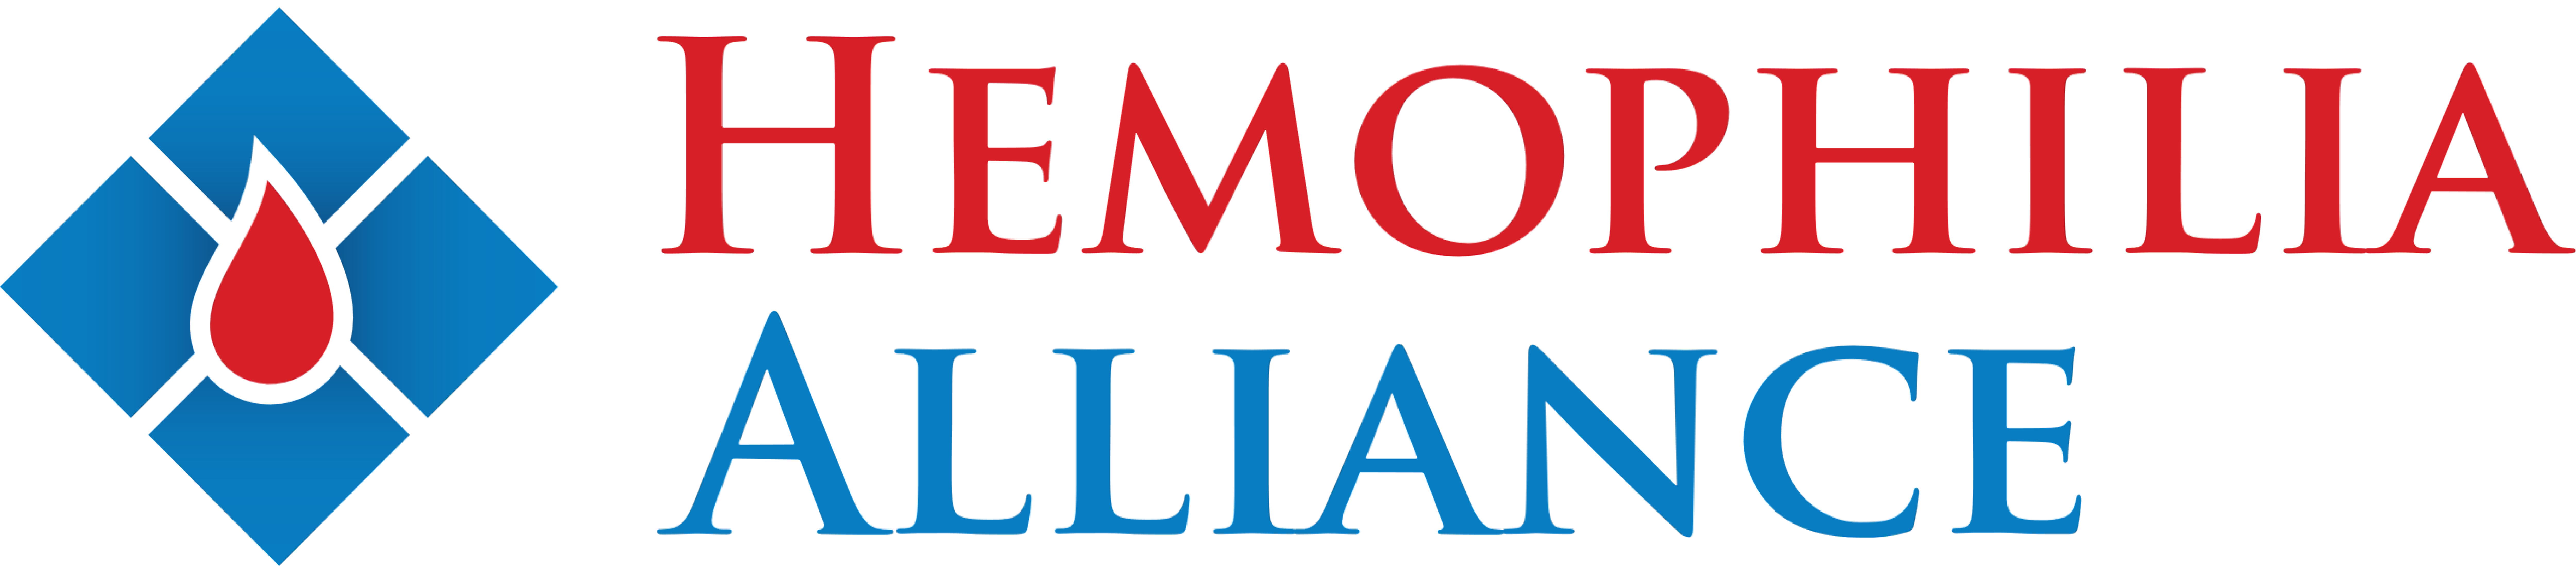 Hemophilia Alliance logo